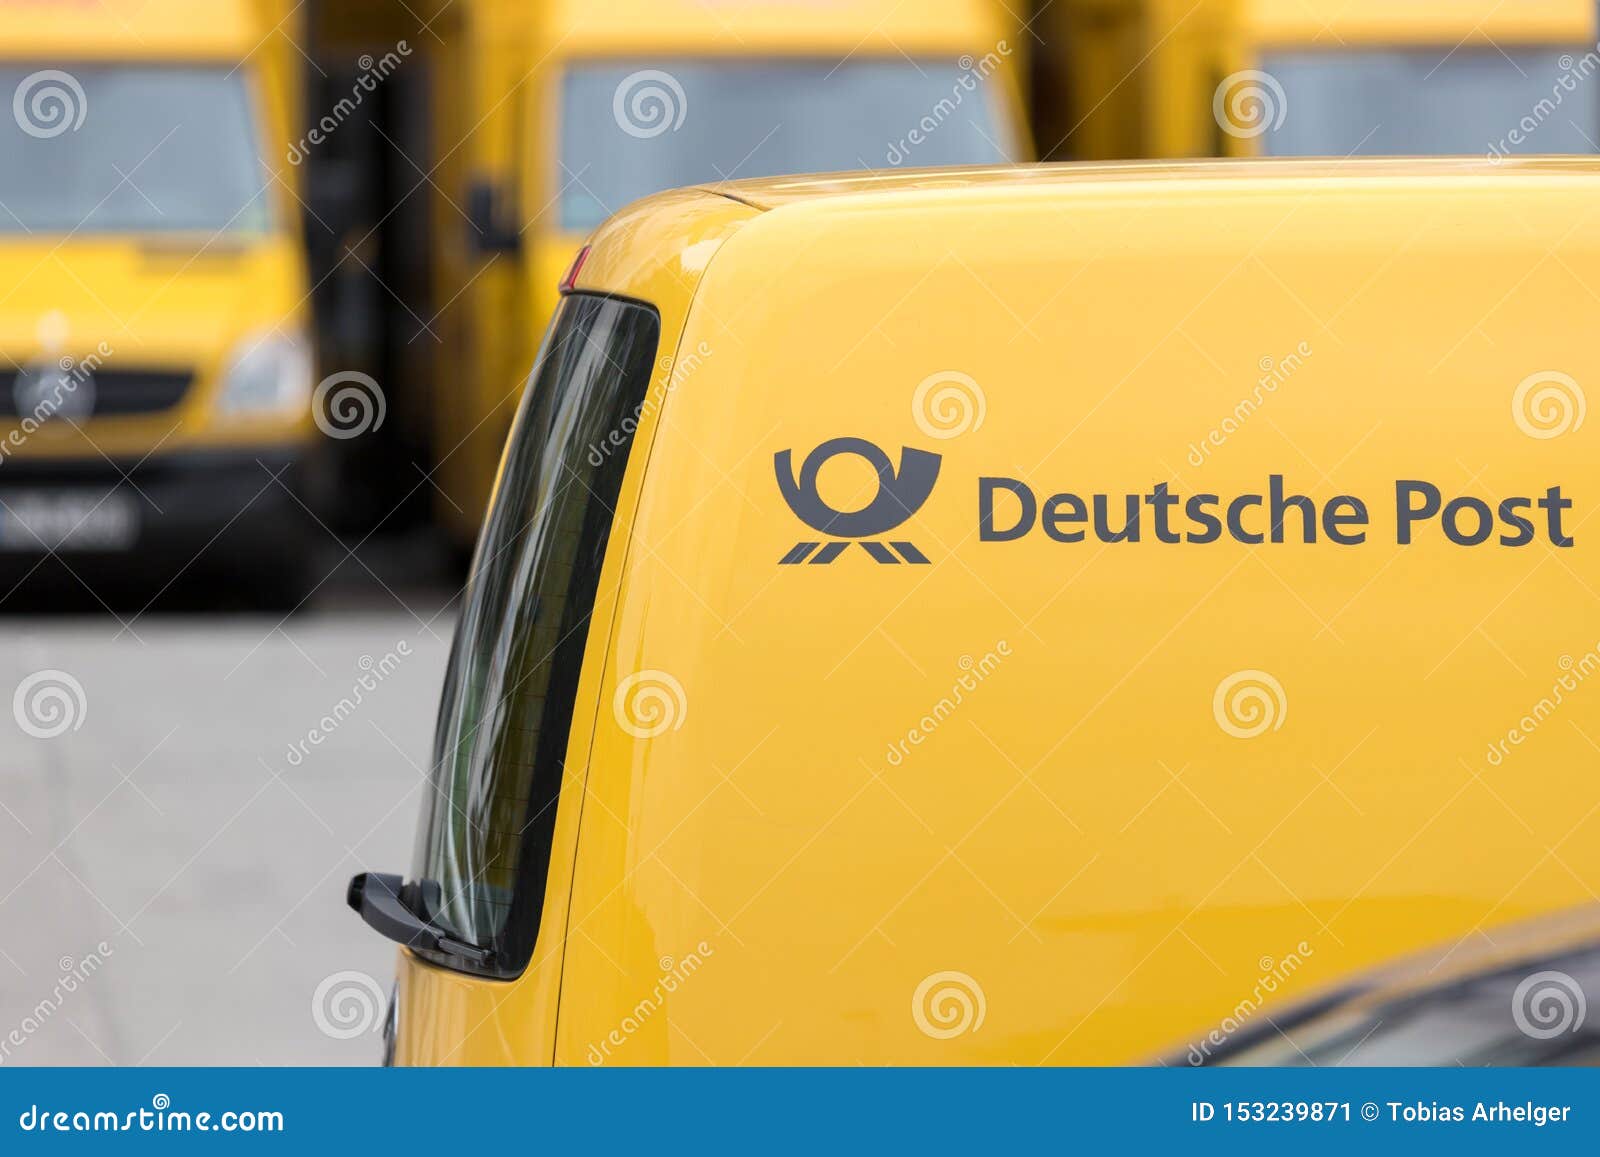 Deutsche Post Truck Fleet In Siegen Germany Editorial Photo - Image of german, mail: 153239871